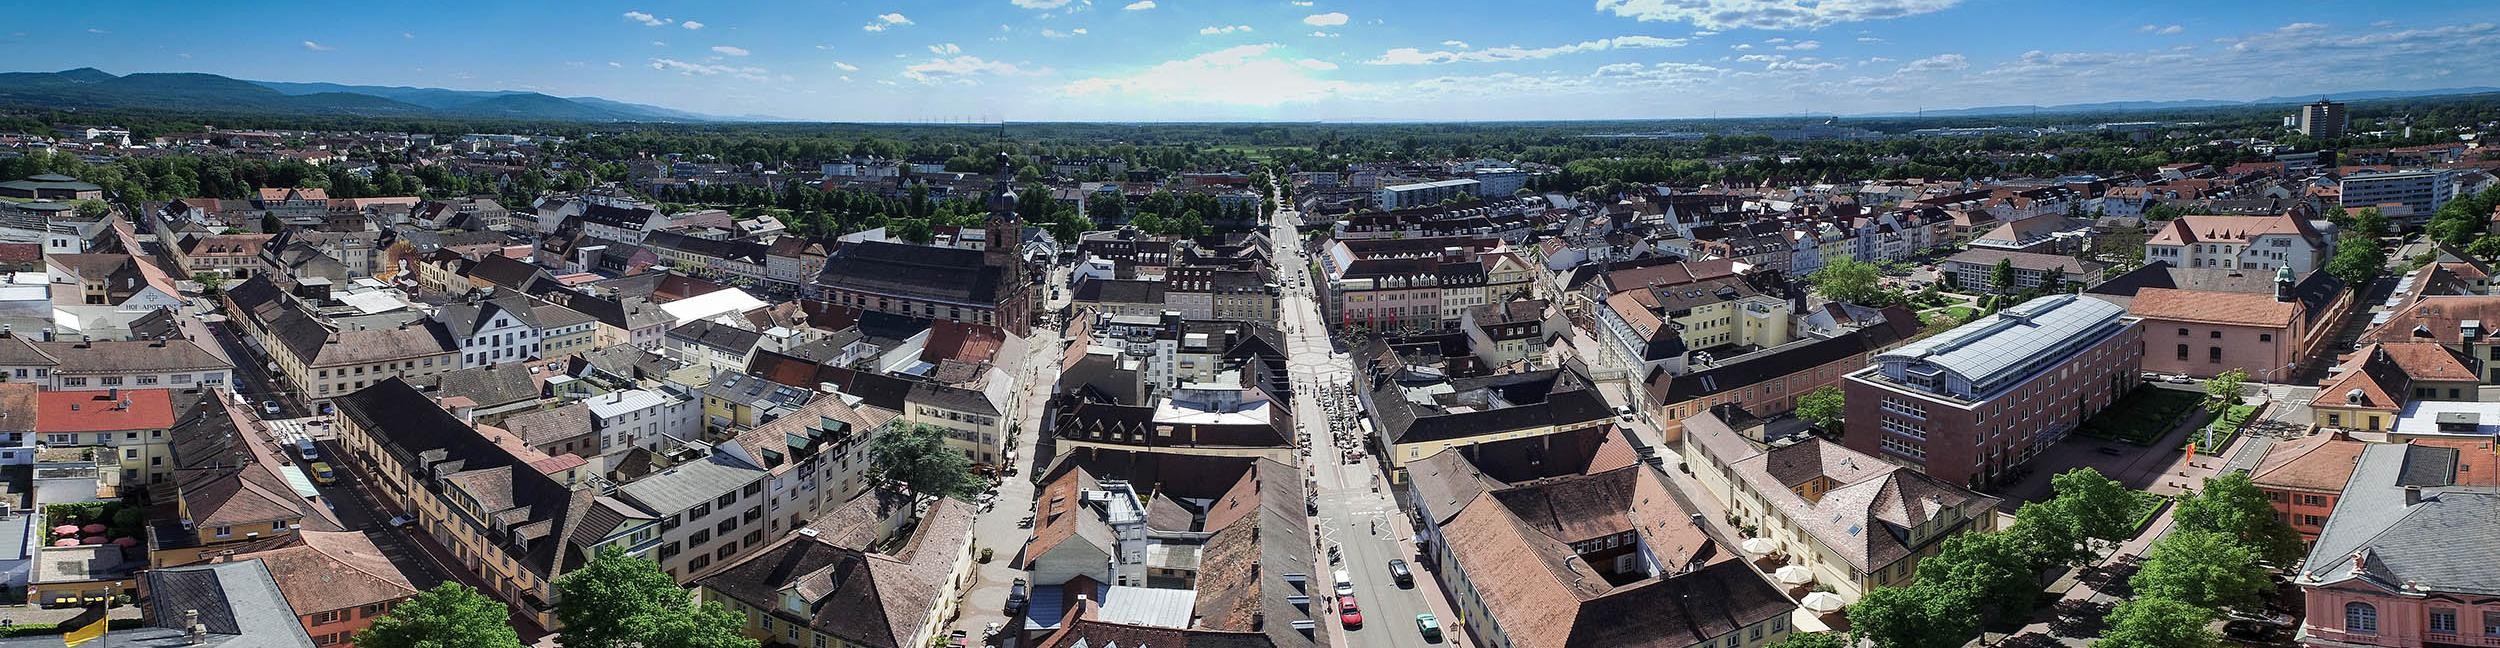 Aerial view city center city Rastatt